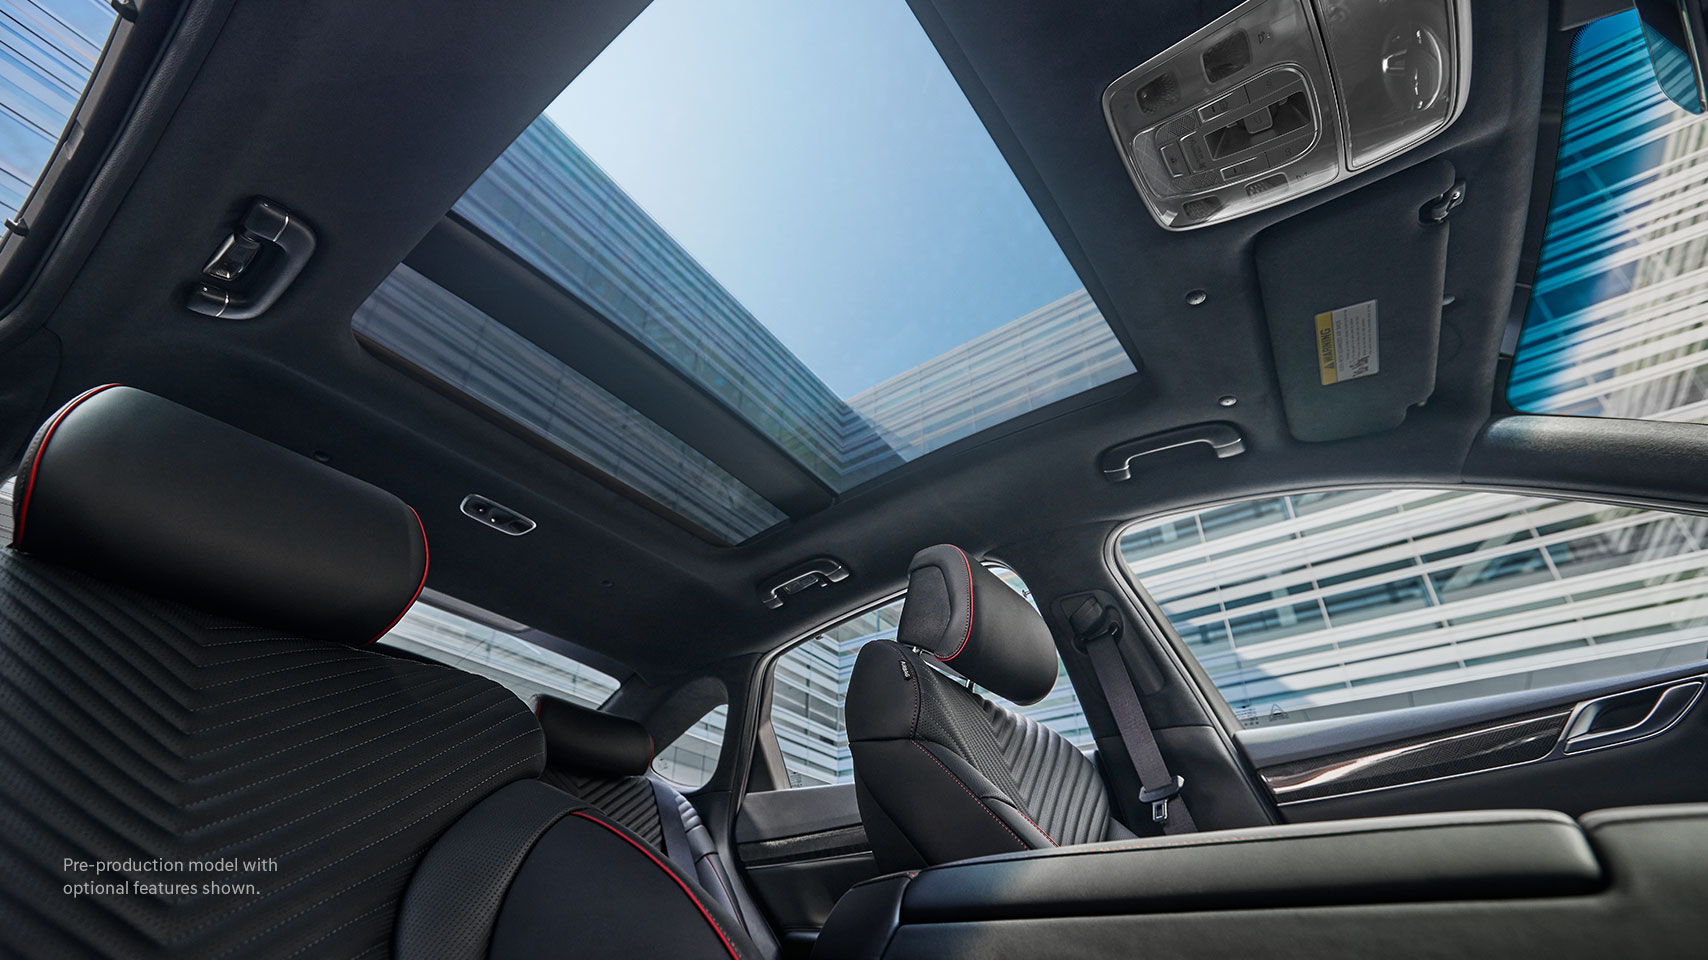 2022 Genesis G80 interior with open Panoramic Sunroof.